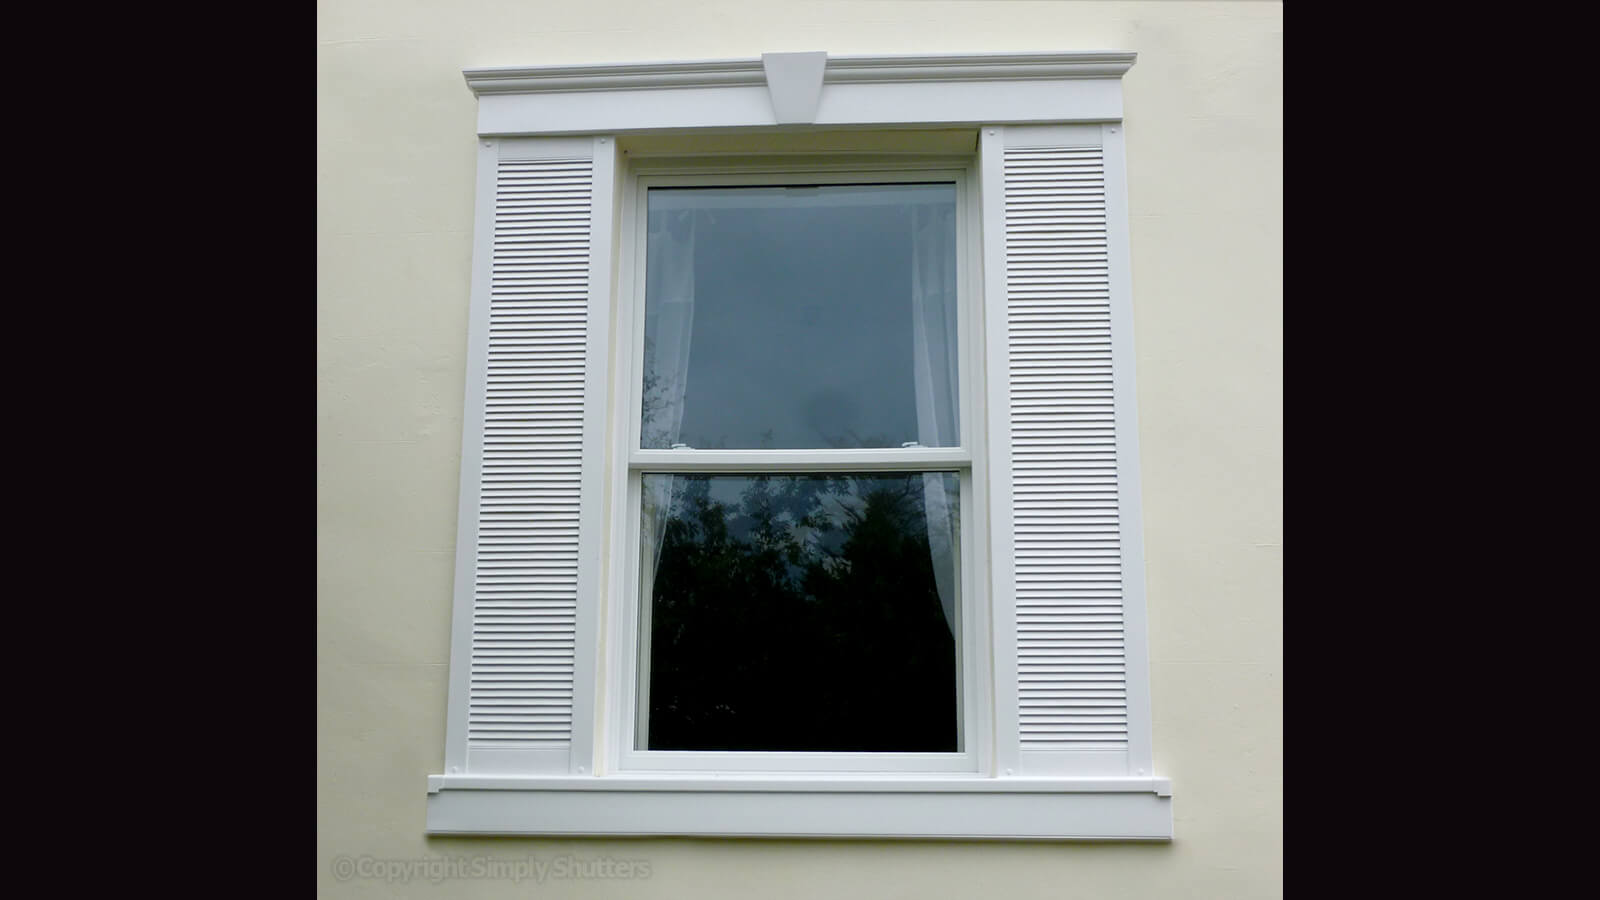 aluminium window installation instructions